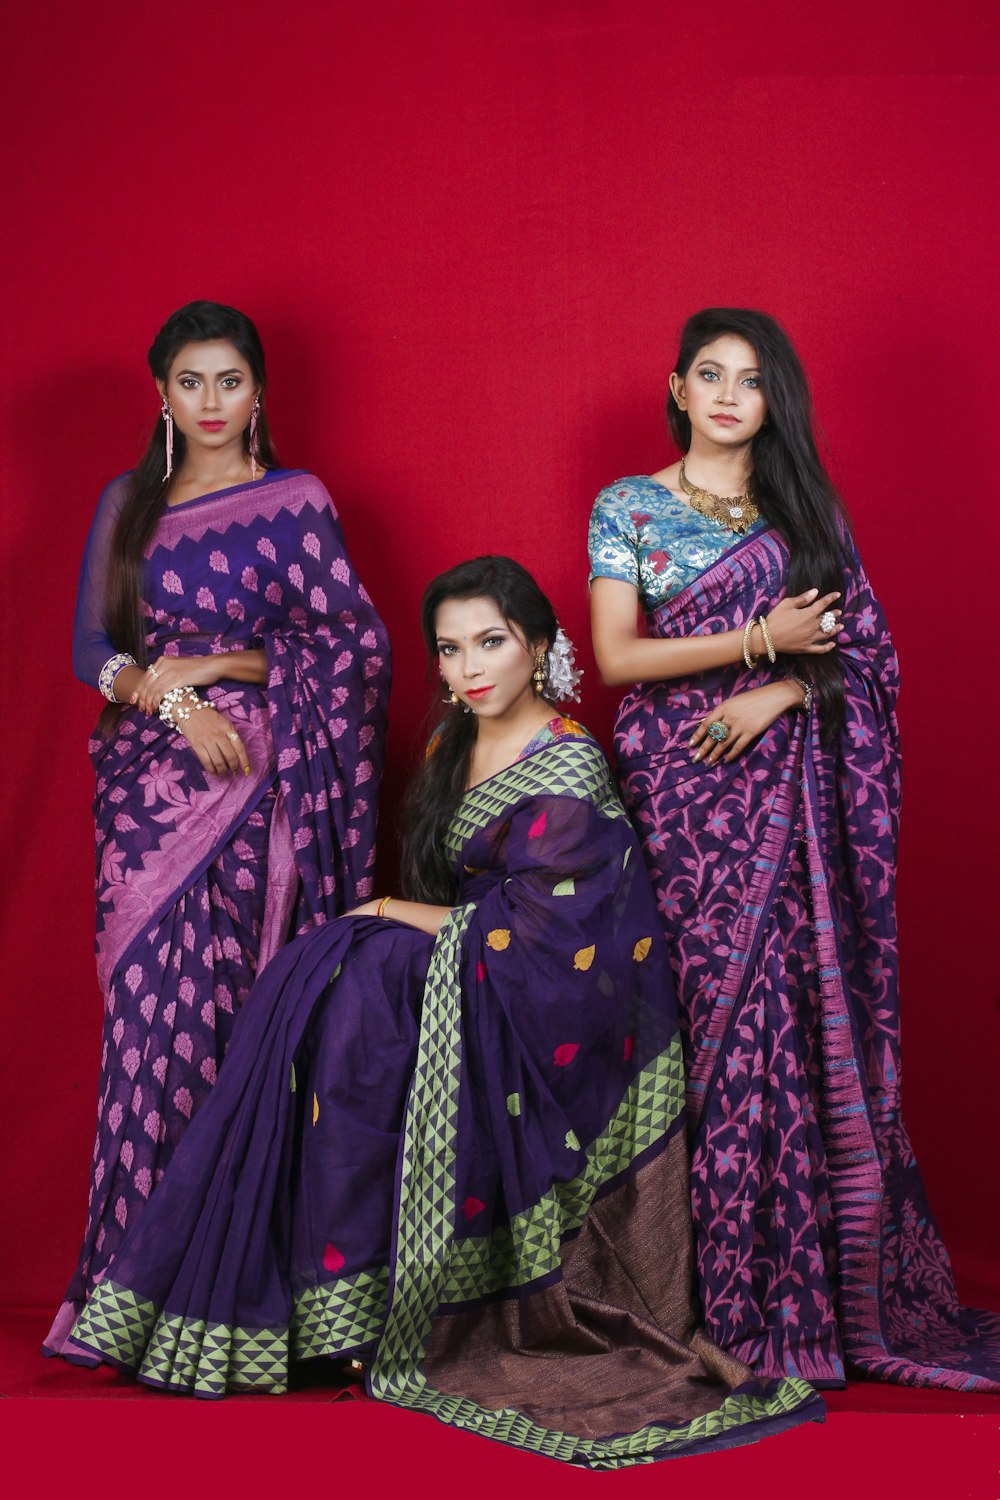 Saree Model Pictures | Download Free Images on Unsplash